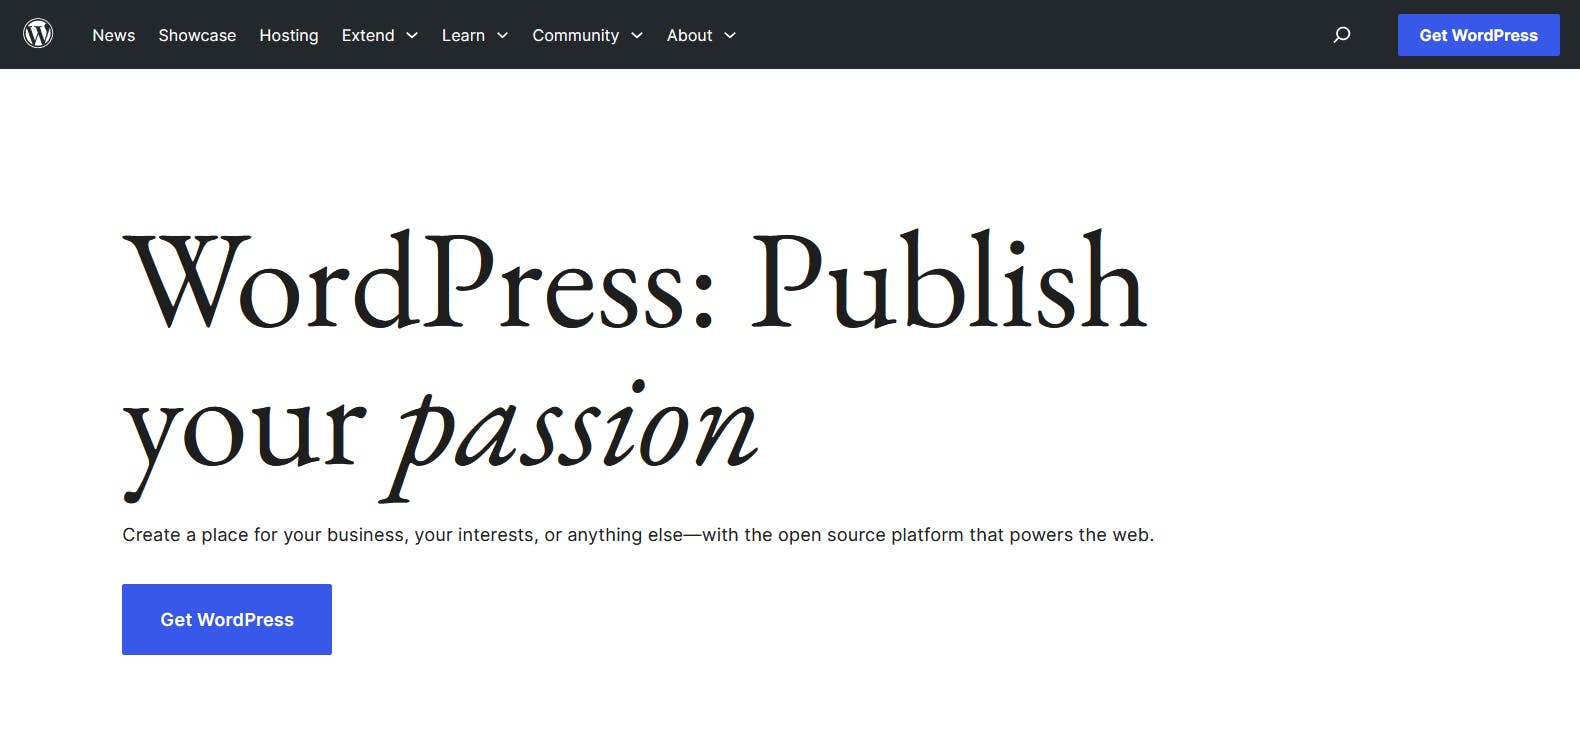 An image of a WordPress landing page.